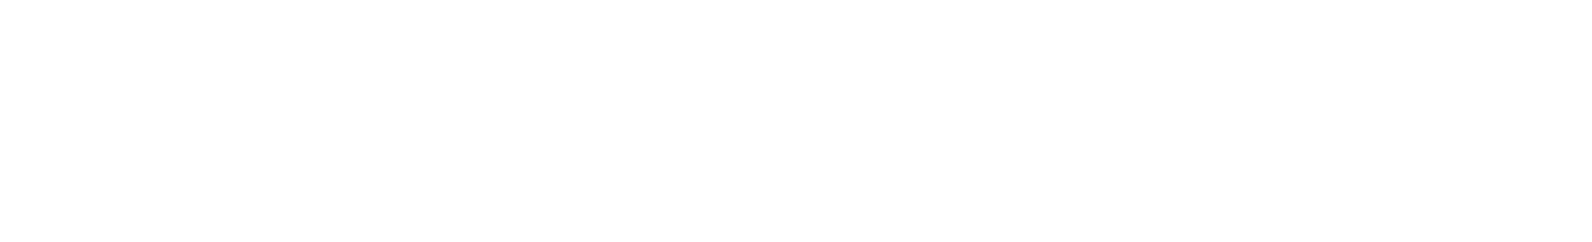 logo INFO allong blanc